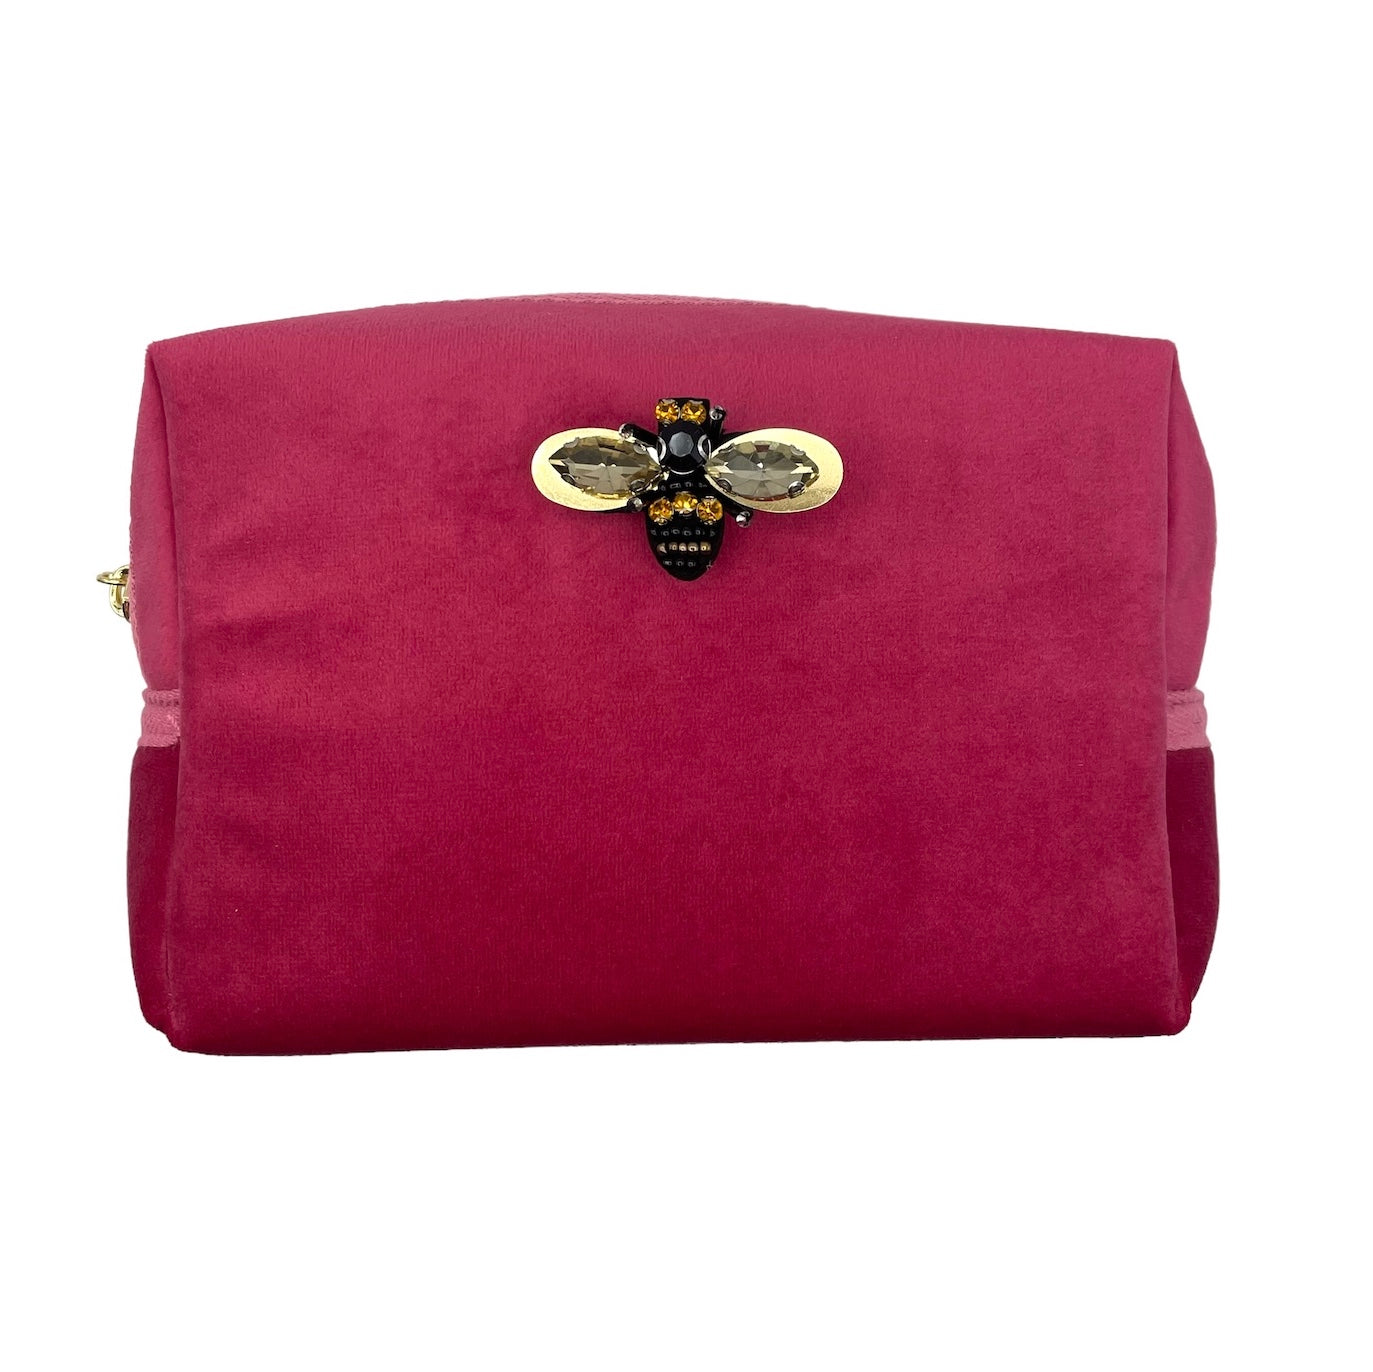 Bright pink make-up bag & bumblebee pin - recycled velvet